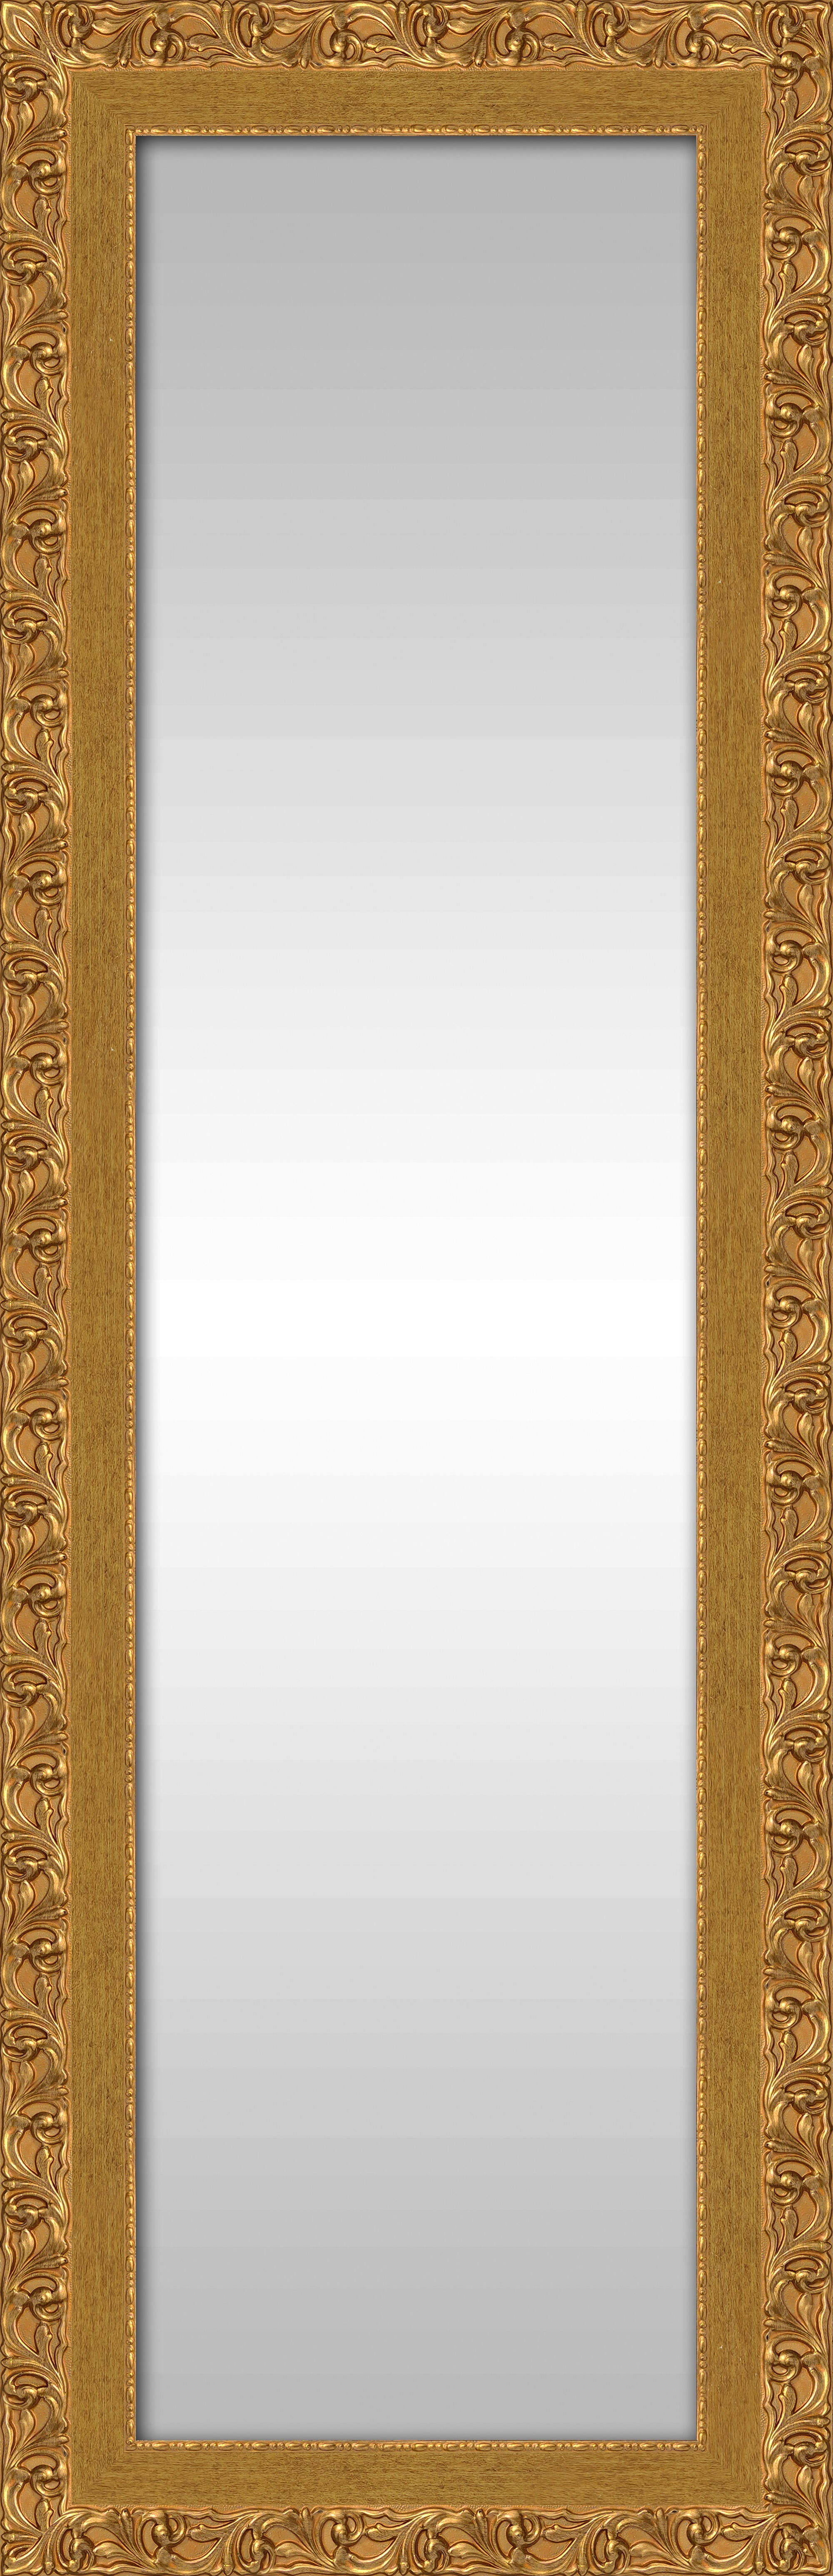 Espejo enmarcado rectangular romantique dorado 133 x 43 cm